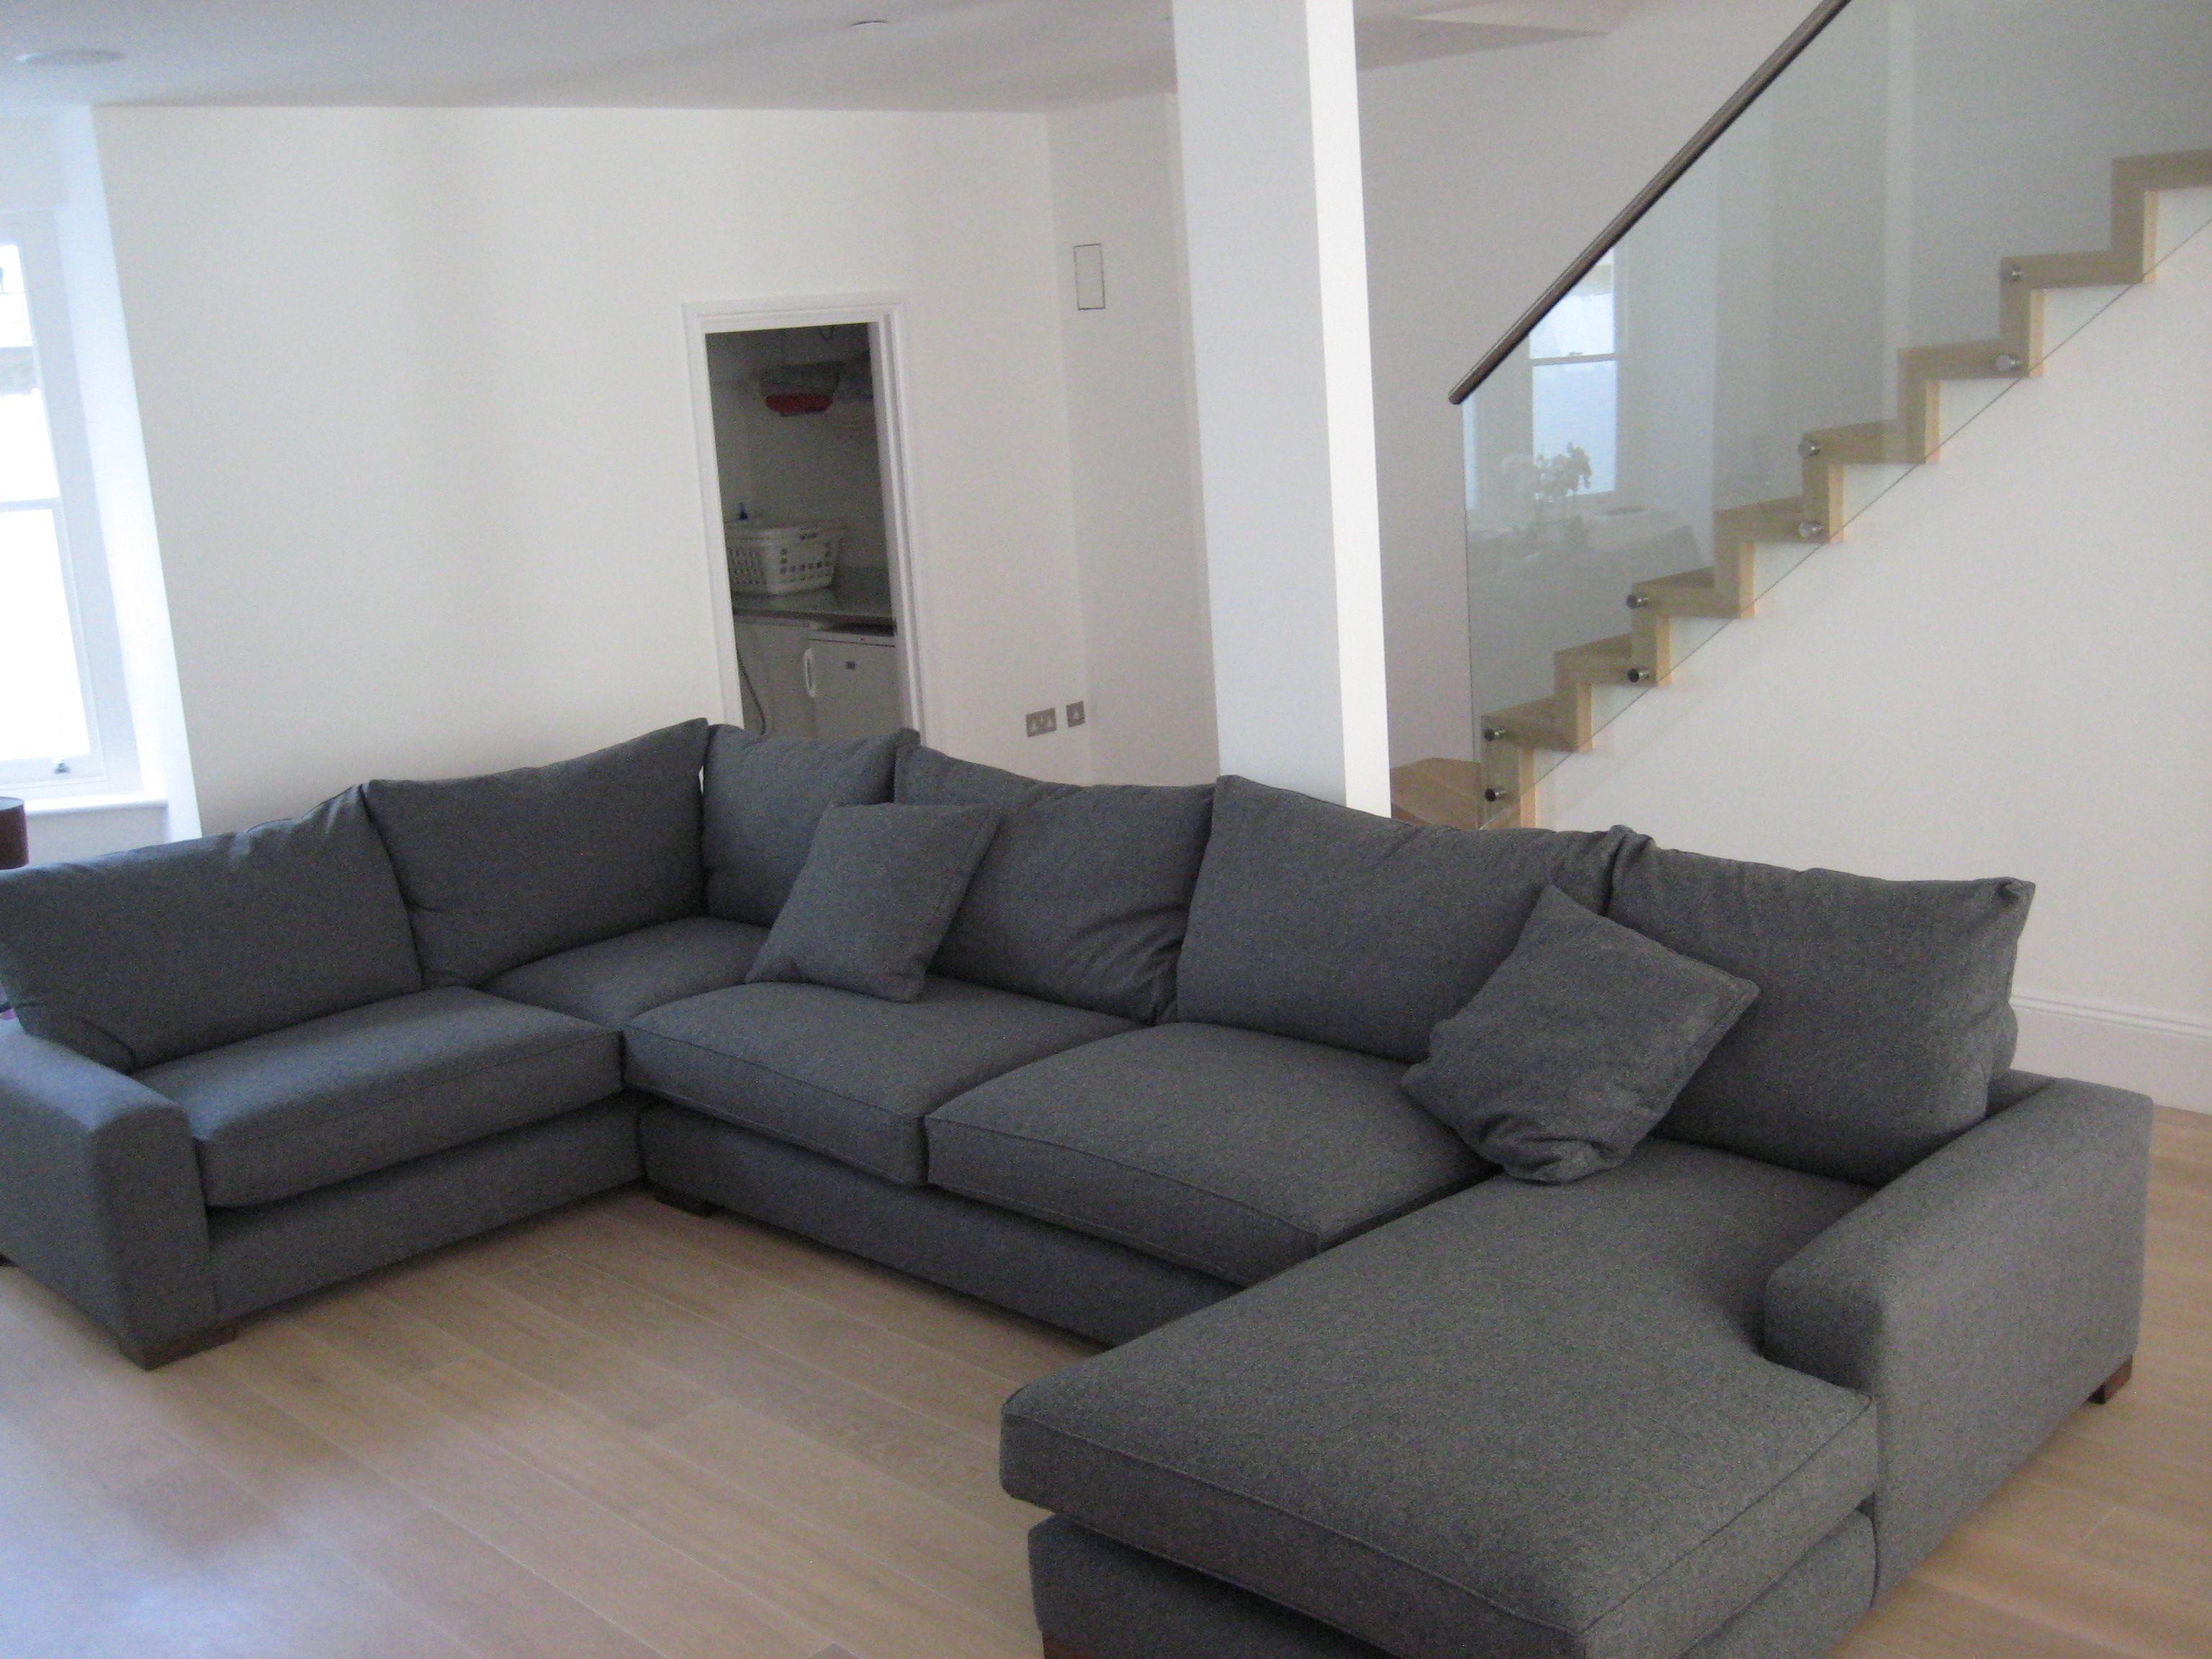 Bespoke Large Corner Sofas | Sofa Ideas